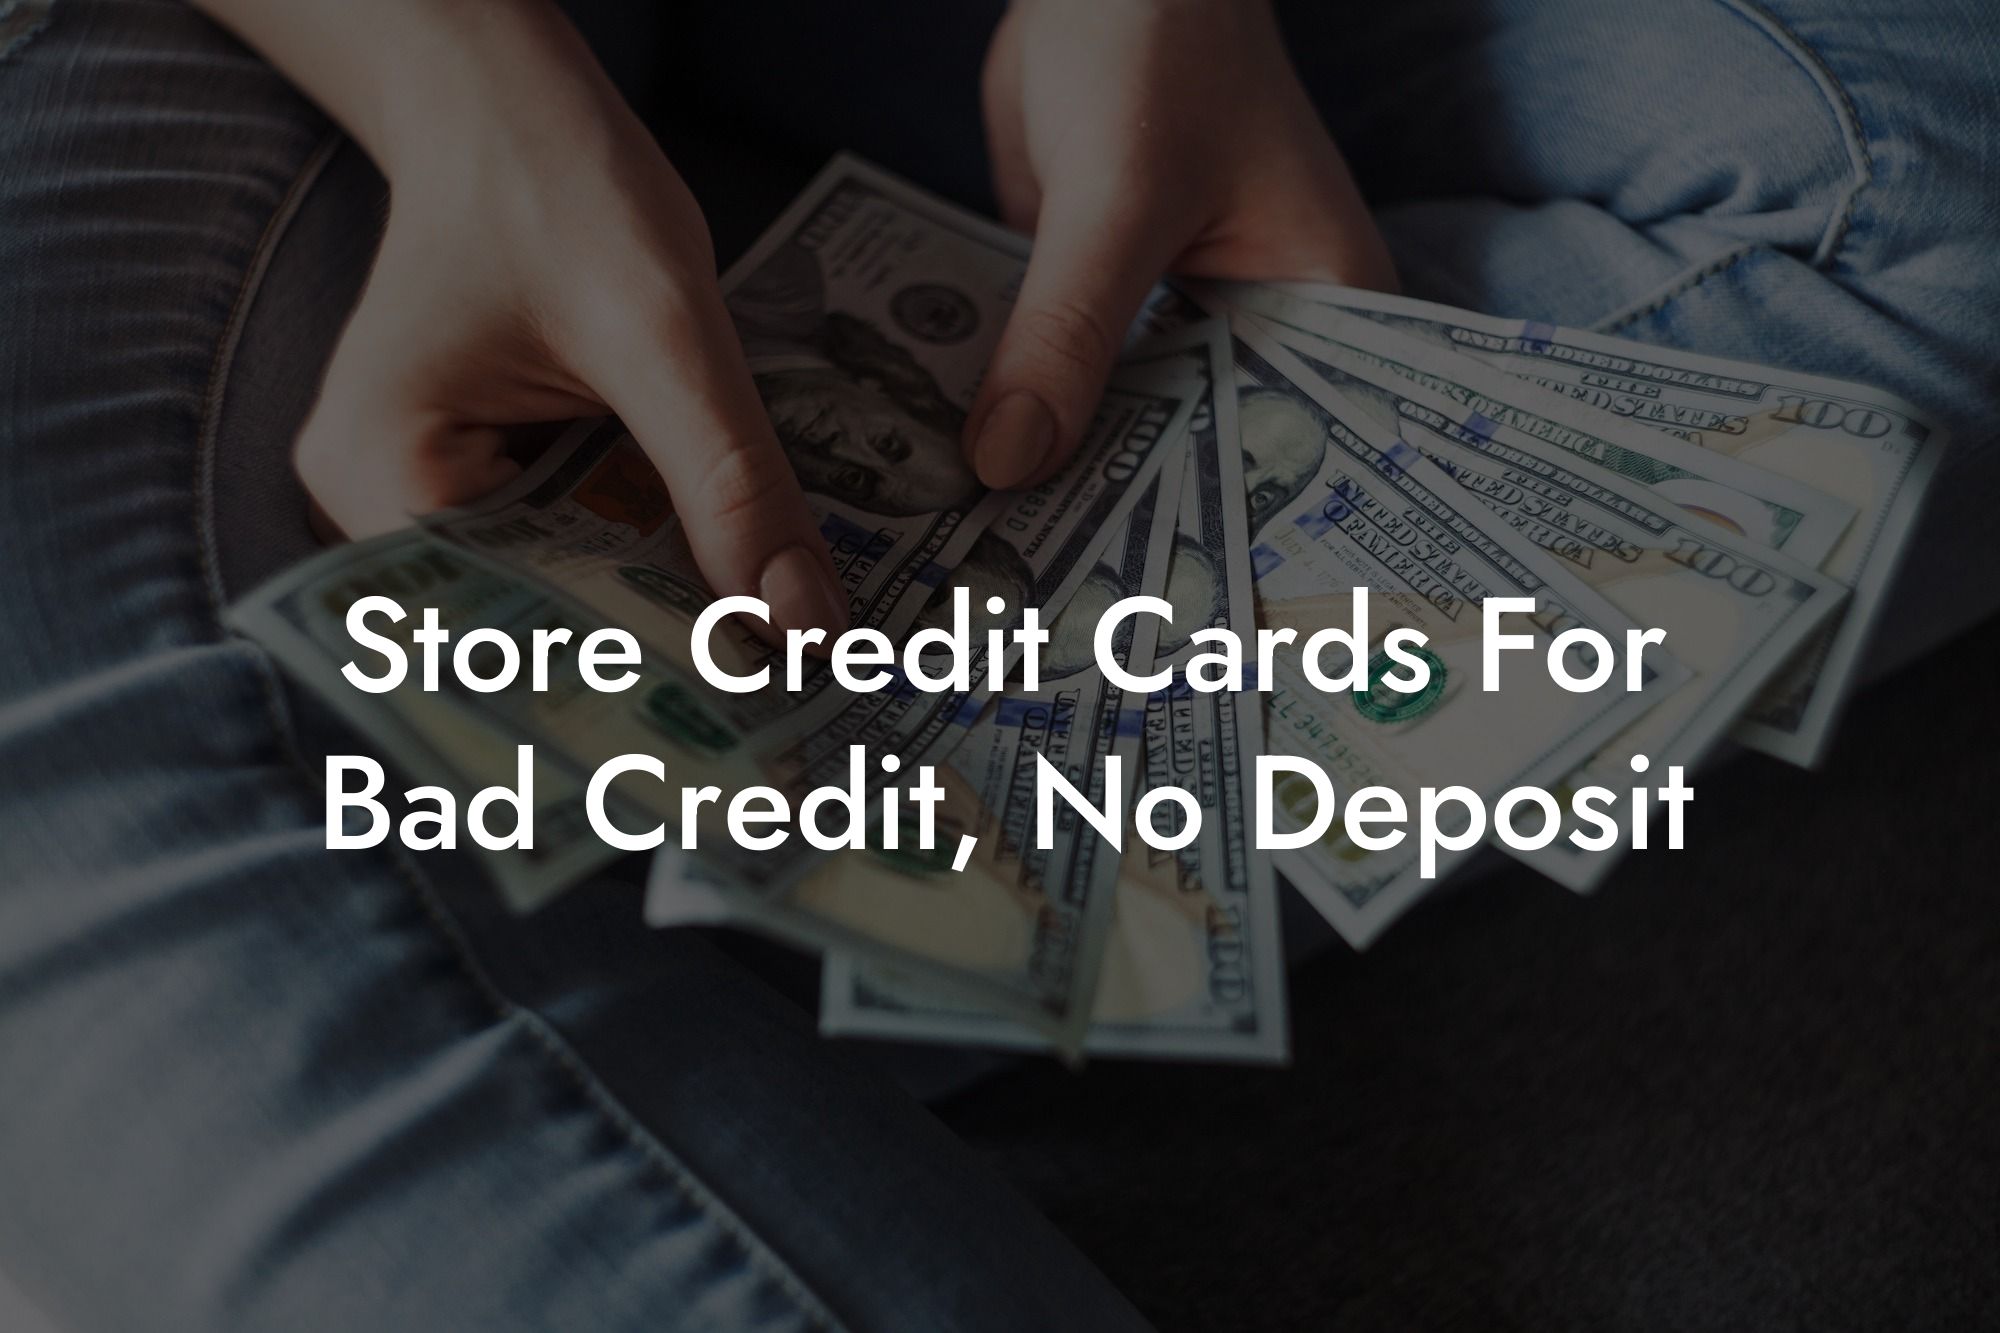 Store Credit Cards For Bad Credit, No Deposit